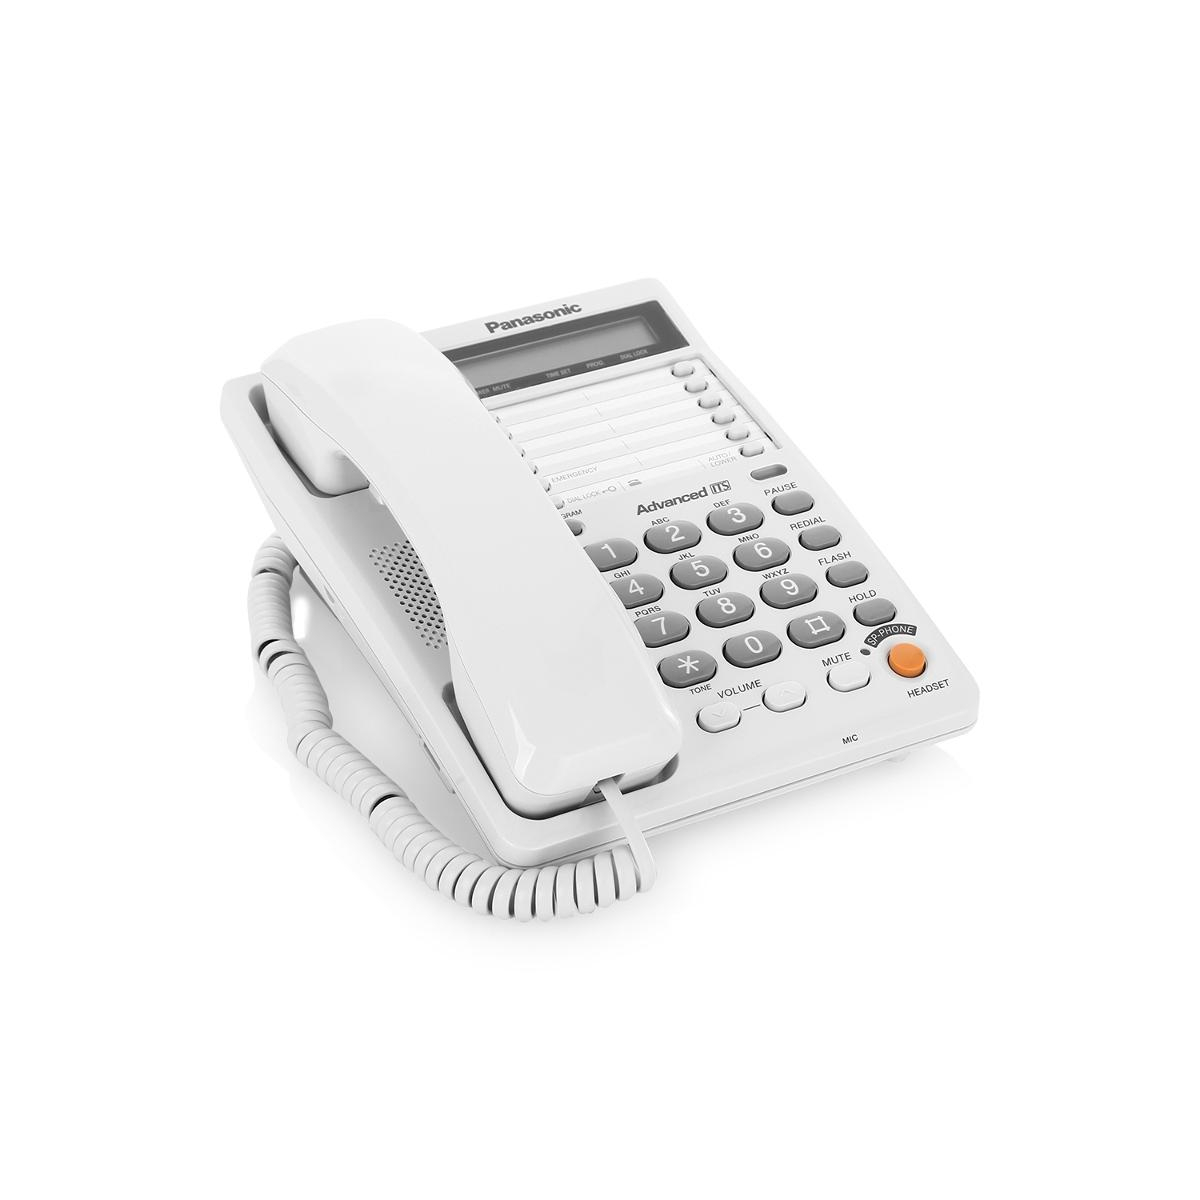 Телефон panasonic kx ts2365ruw. Panasonic KX-ts2365ruw. Проводной телефон Панасоник KX-ts2365ruw. Телефон Panasonic KX-ts2365ruw, белый. Panasonic марки KX-ts2365ruw.